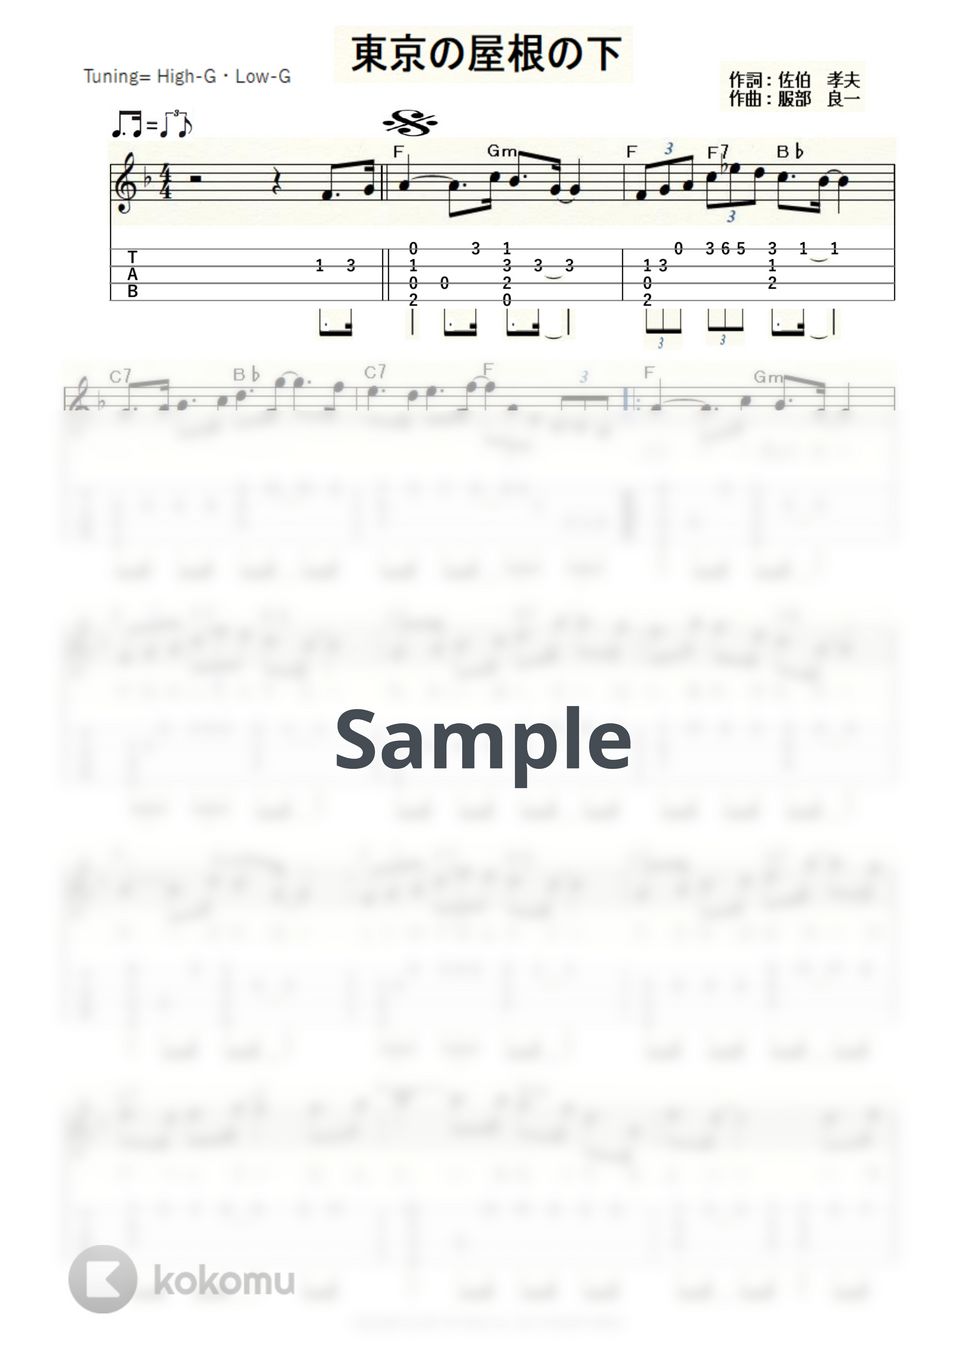 灰田勝彦 - 東京の屋根の下 (ｳｸﾚﾚｿﾛ/High-G・Low-G/中級) by ukulelepapa